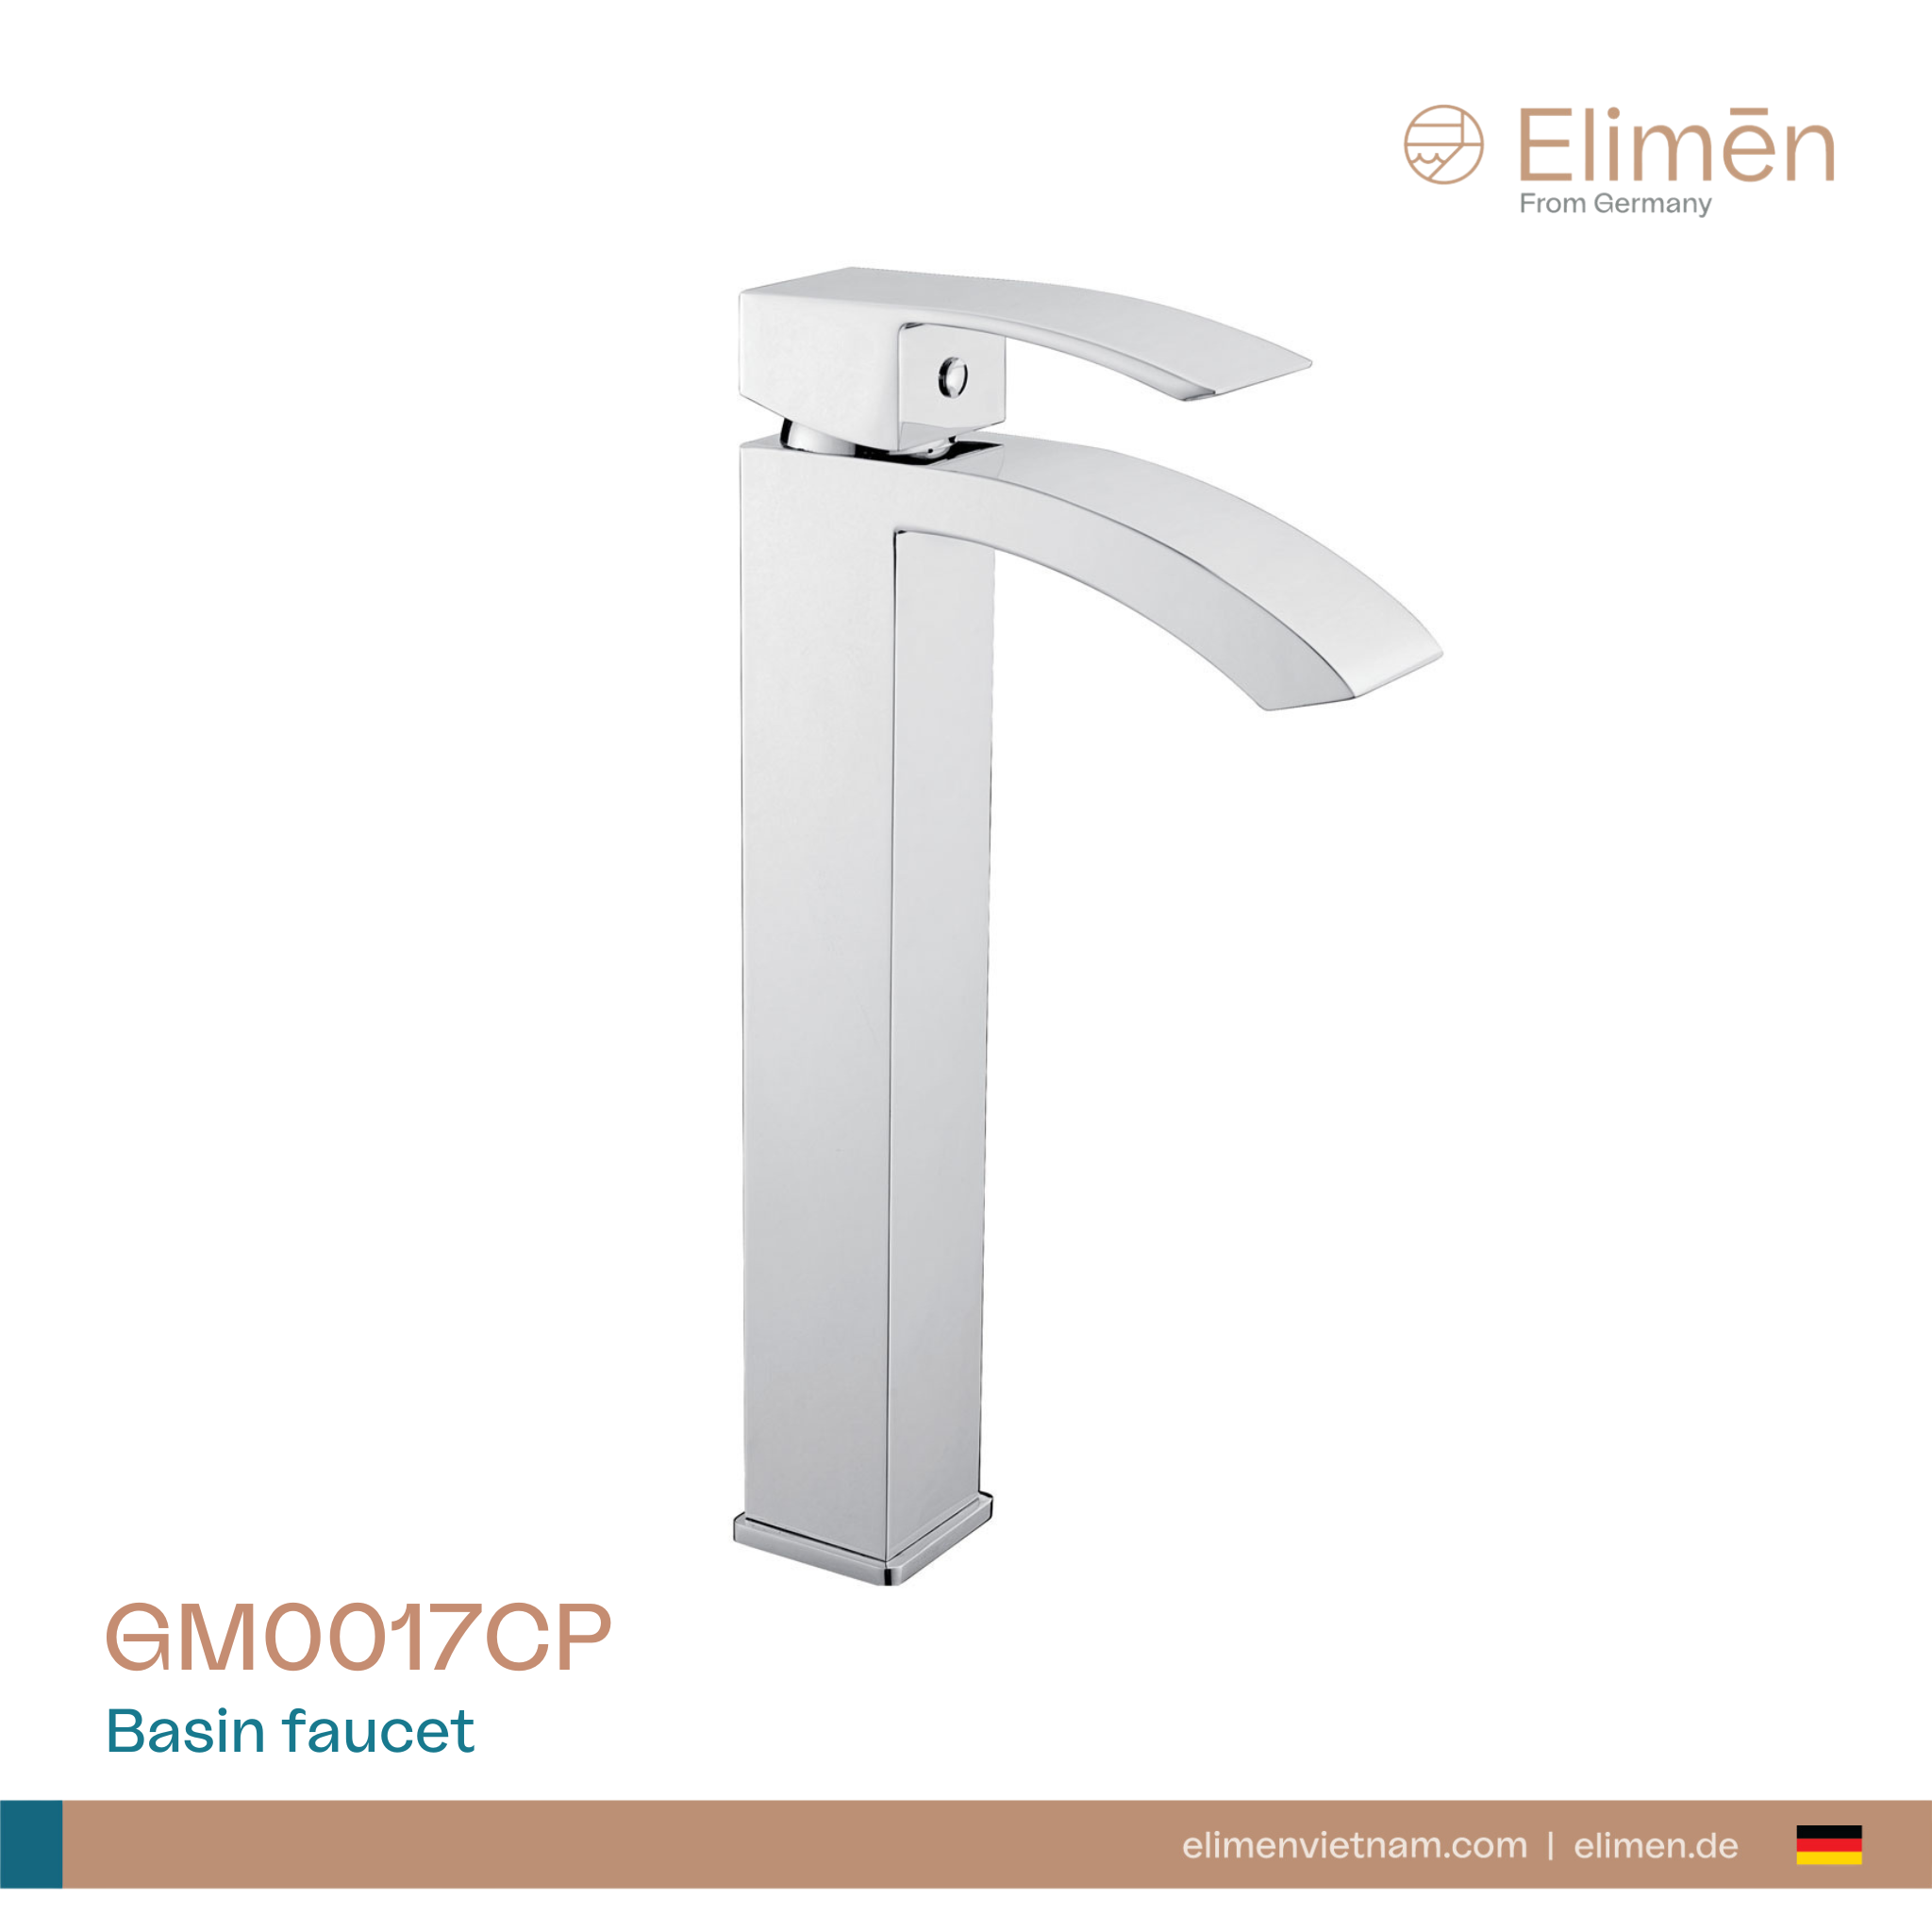 Vòi lavabo Elimen - Mã GM0017CP